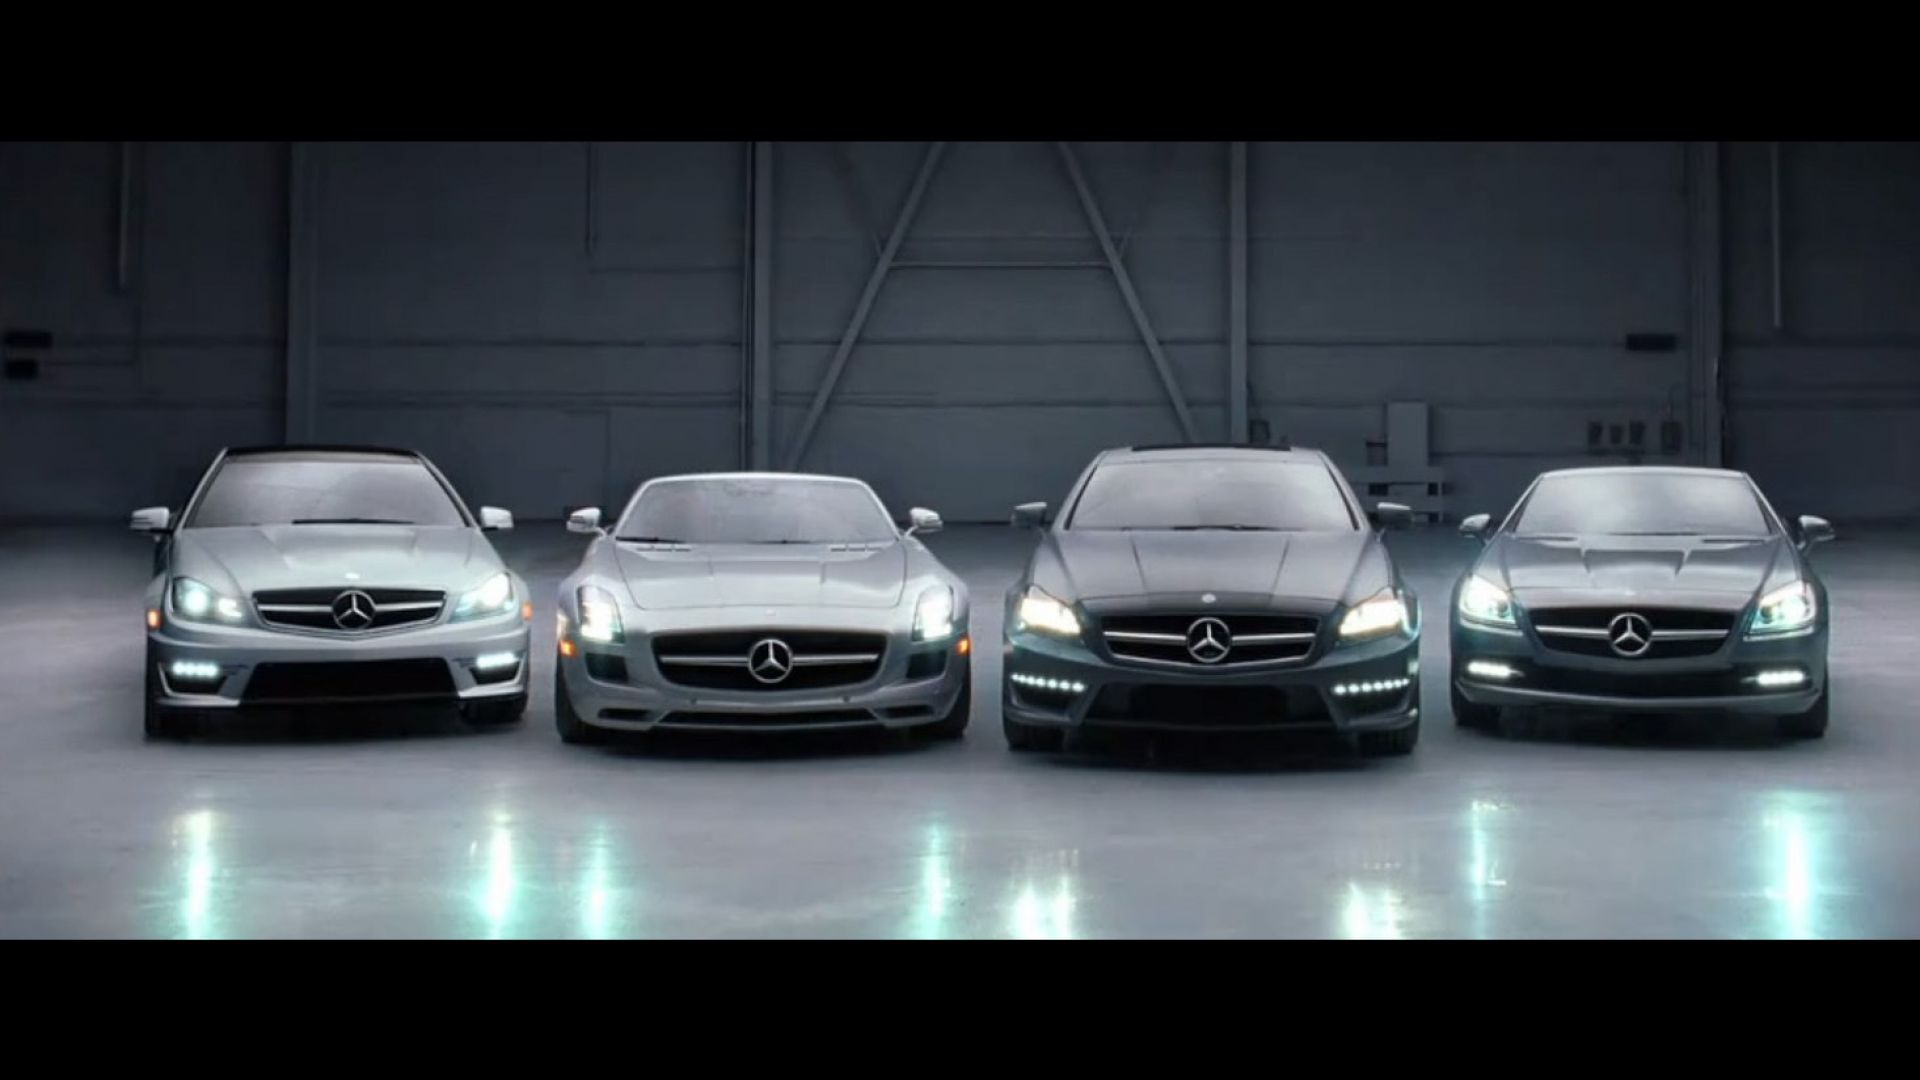 Реклама mercedes. Три Мерседеса. Реклама автомобиля Мерседес. Рекламе автомобиля Mercedes - Benz. Ряд Мерседес Бенц.